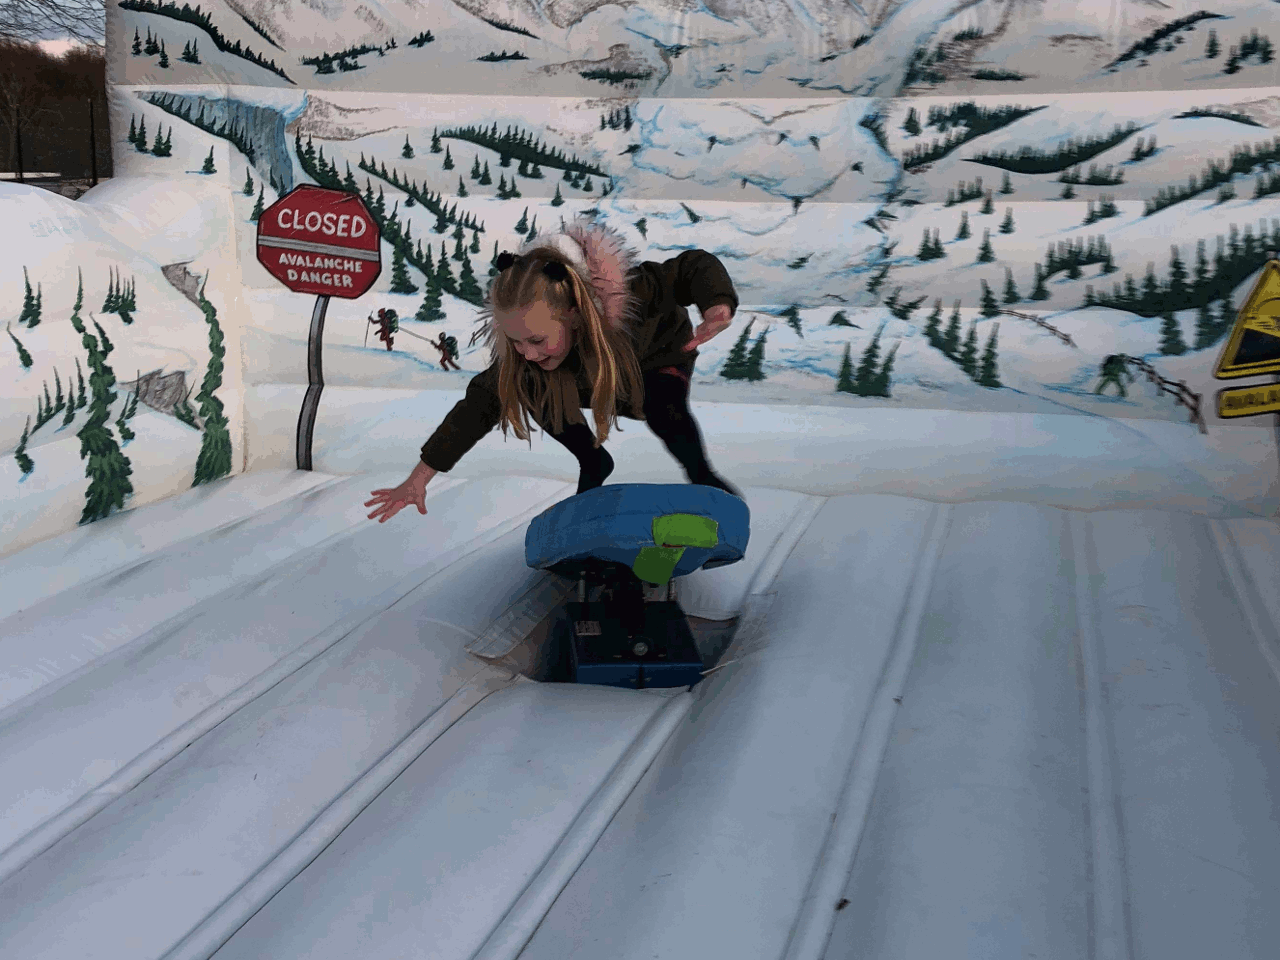 Matilda snowboarding on the simulator sponsored by Trident